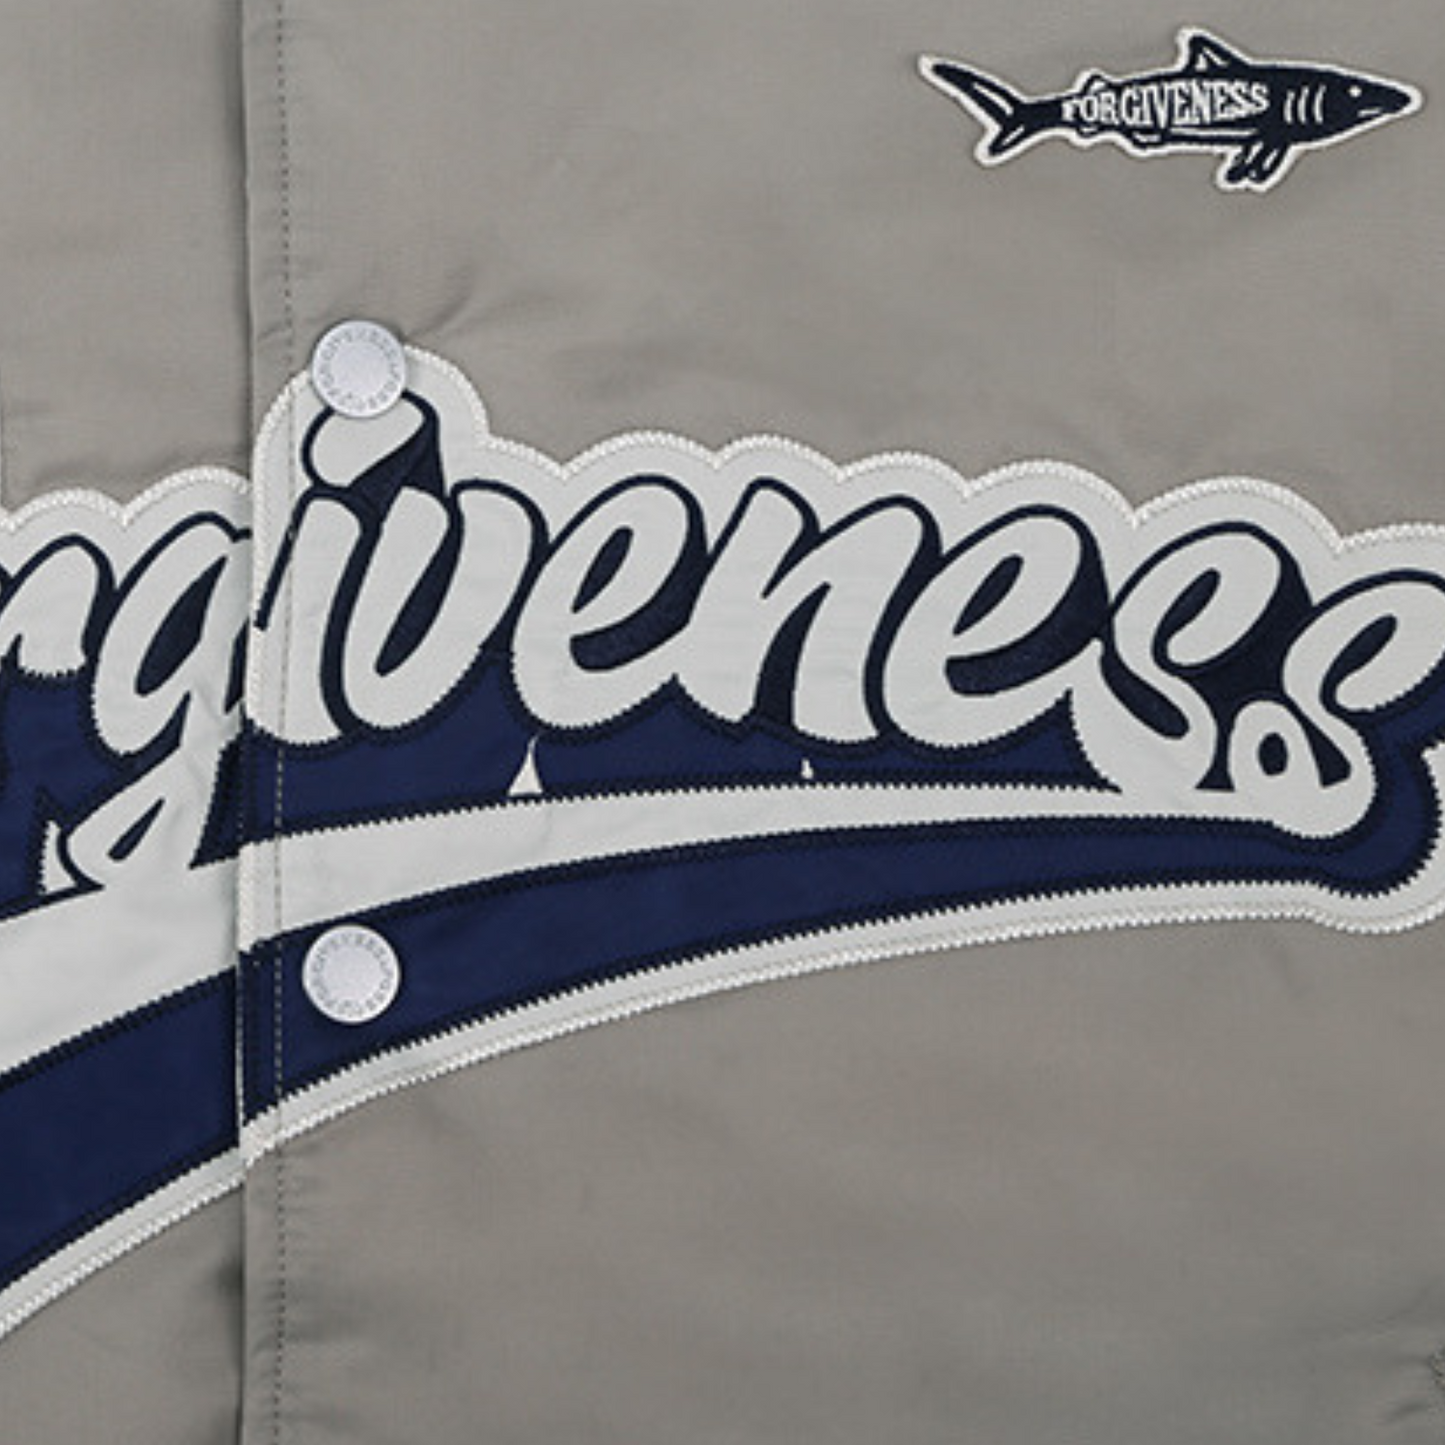 Forgiveness Classic Baseball Jacket